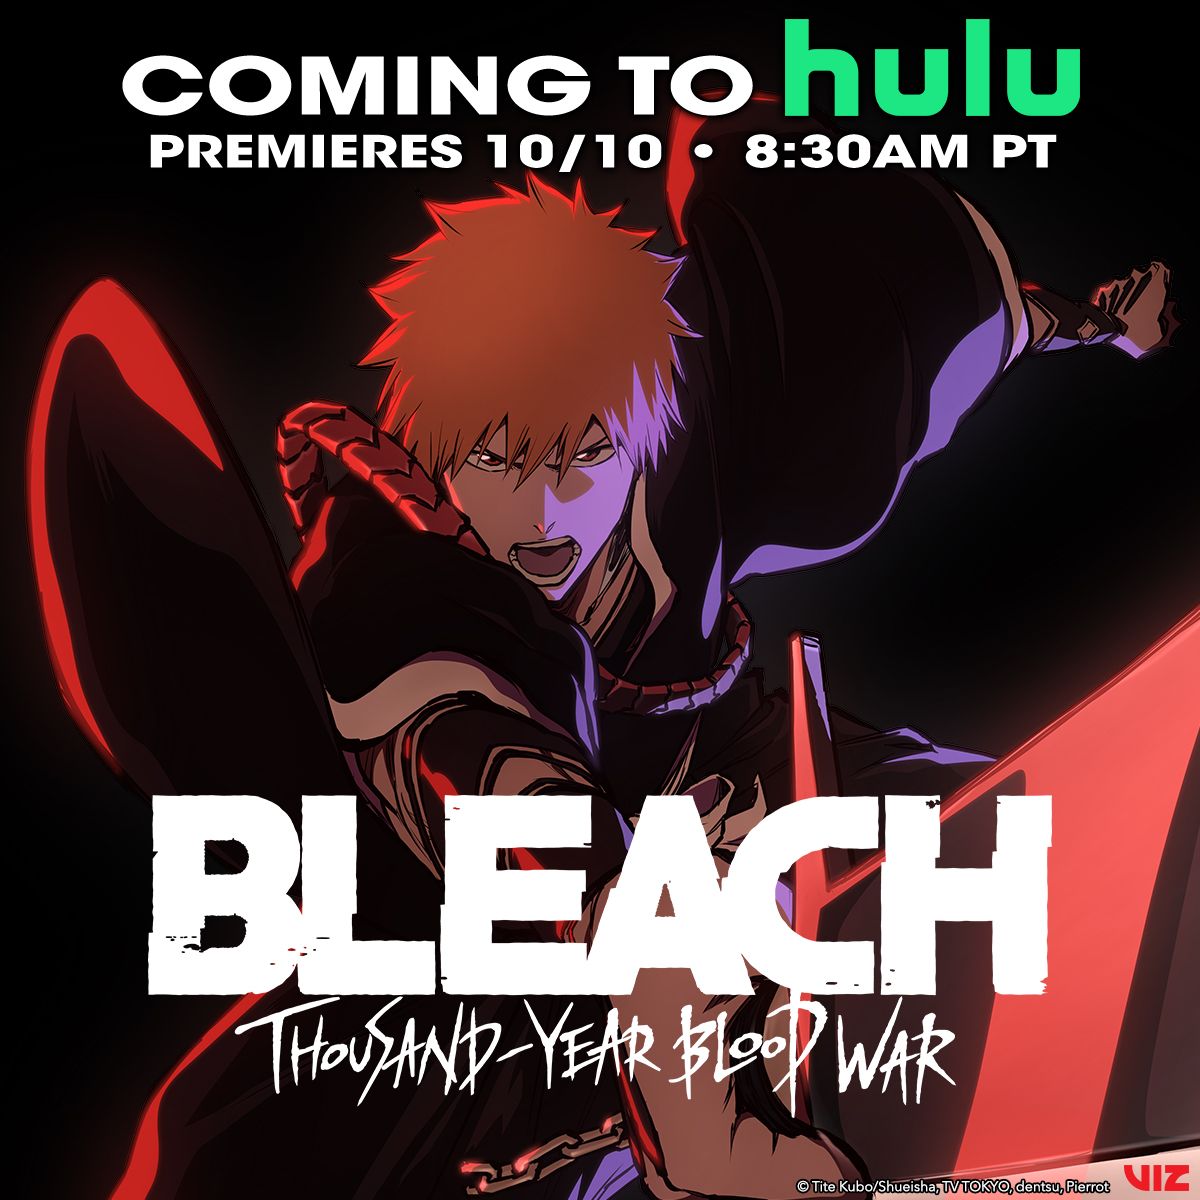 Bleach: Thousand-Year Blood War 